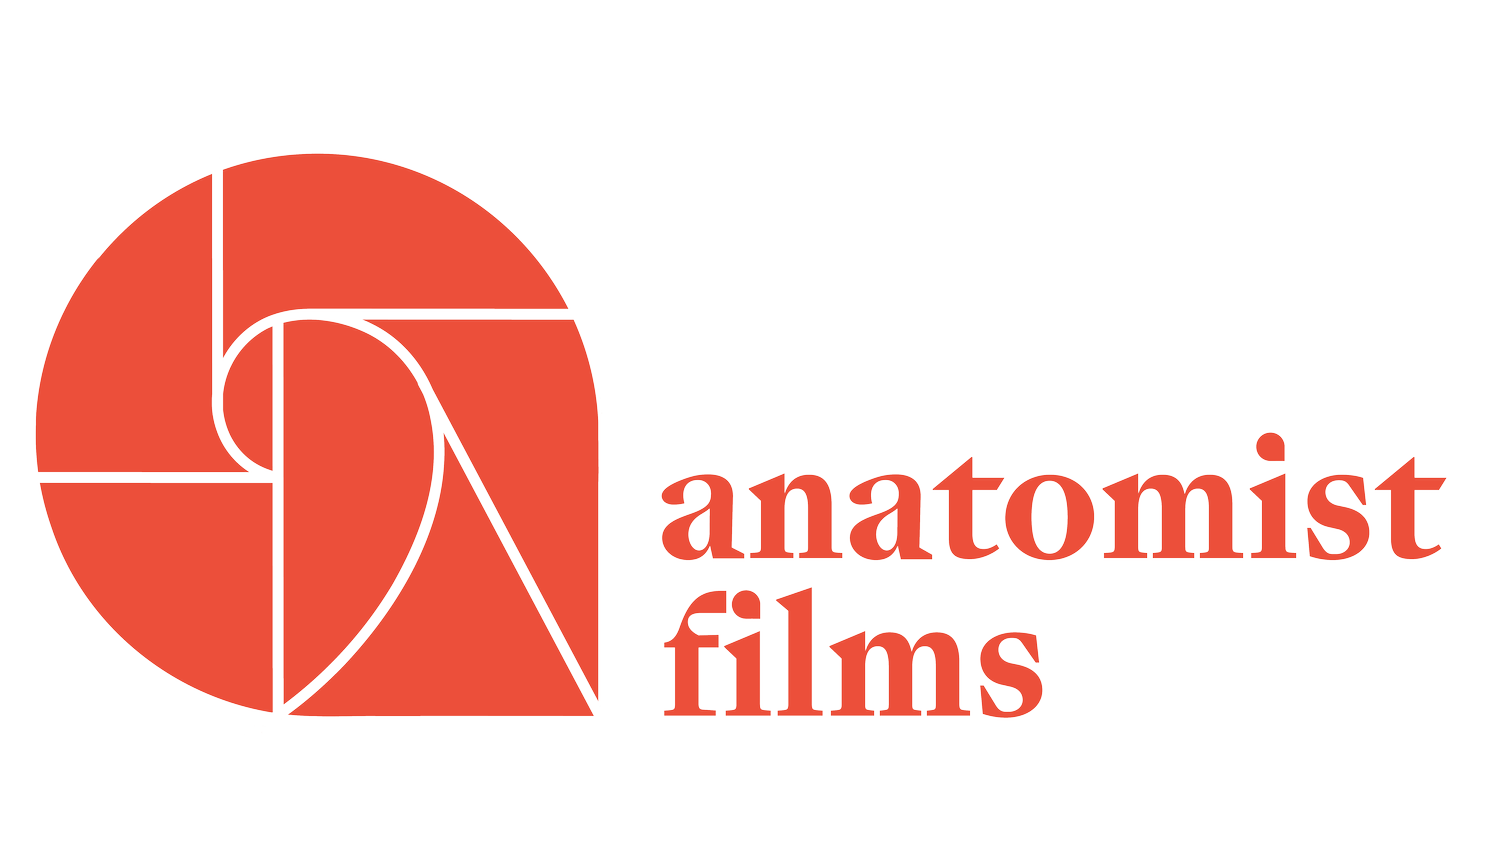 ANATOMIST FILMS